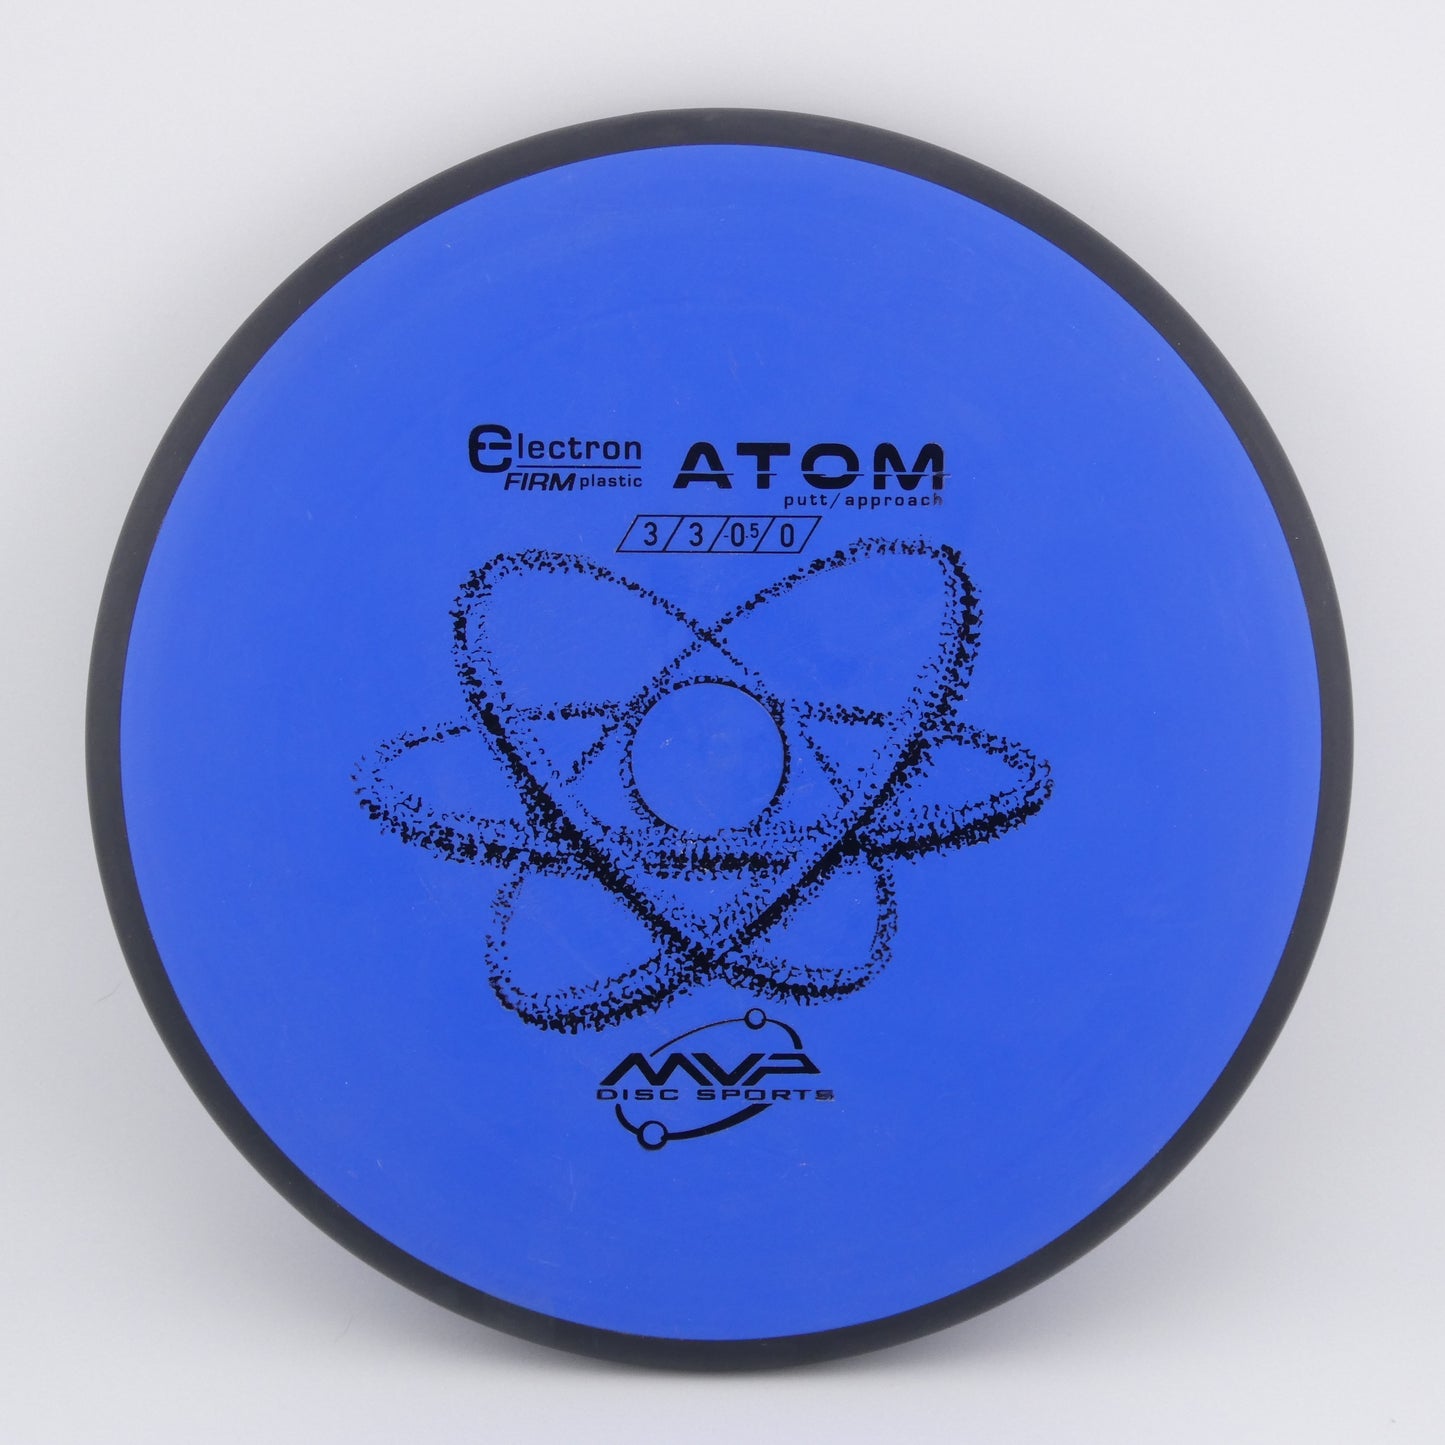 Electron Atom 151-160g